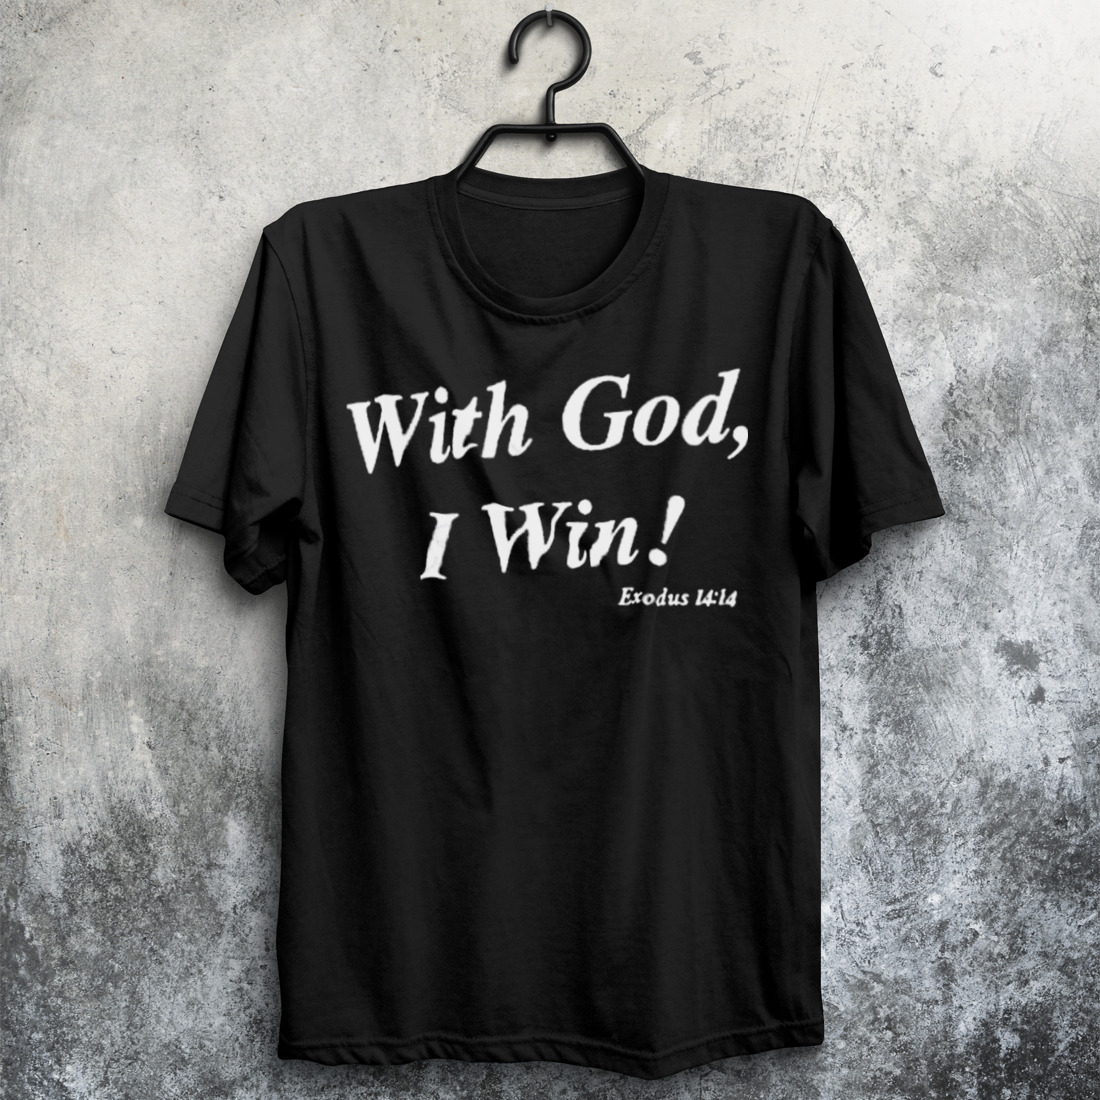 With God I Win Shirt